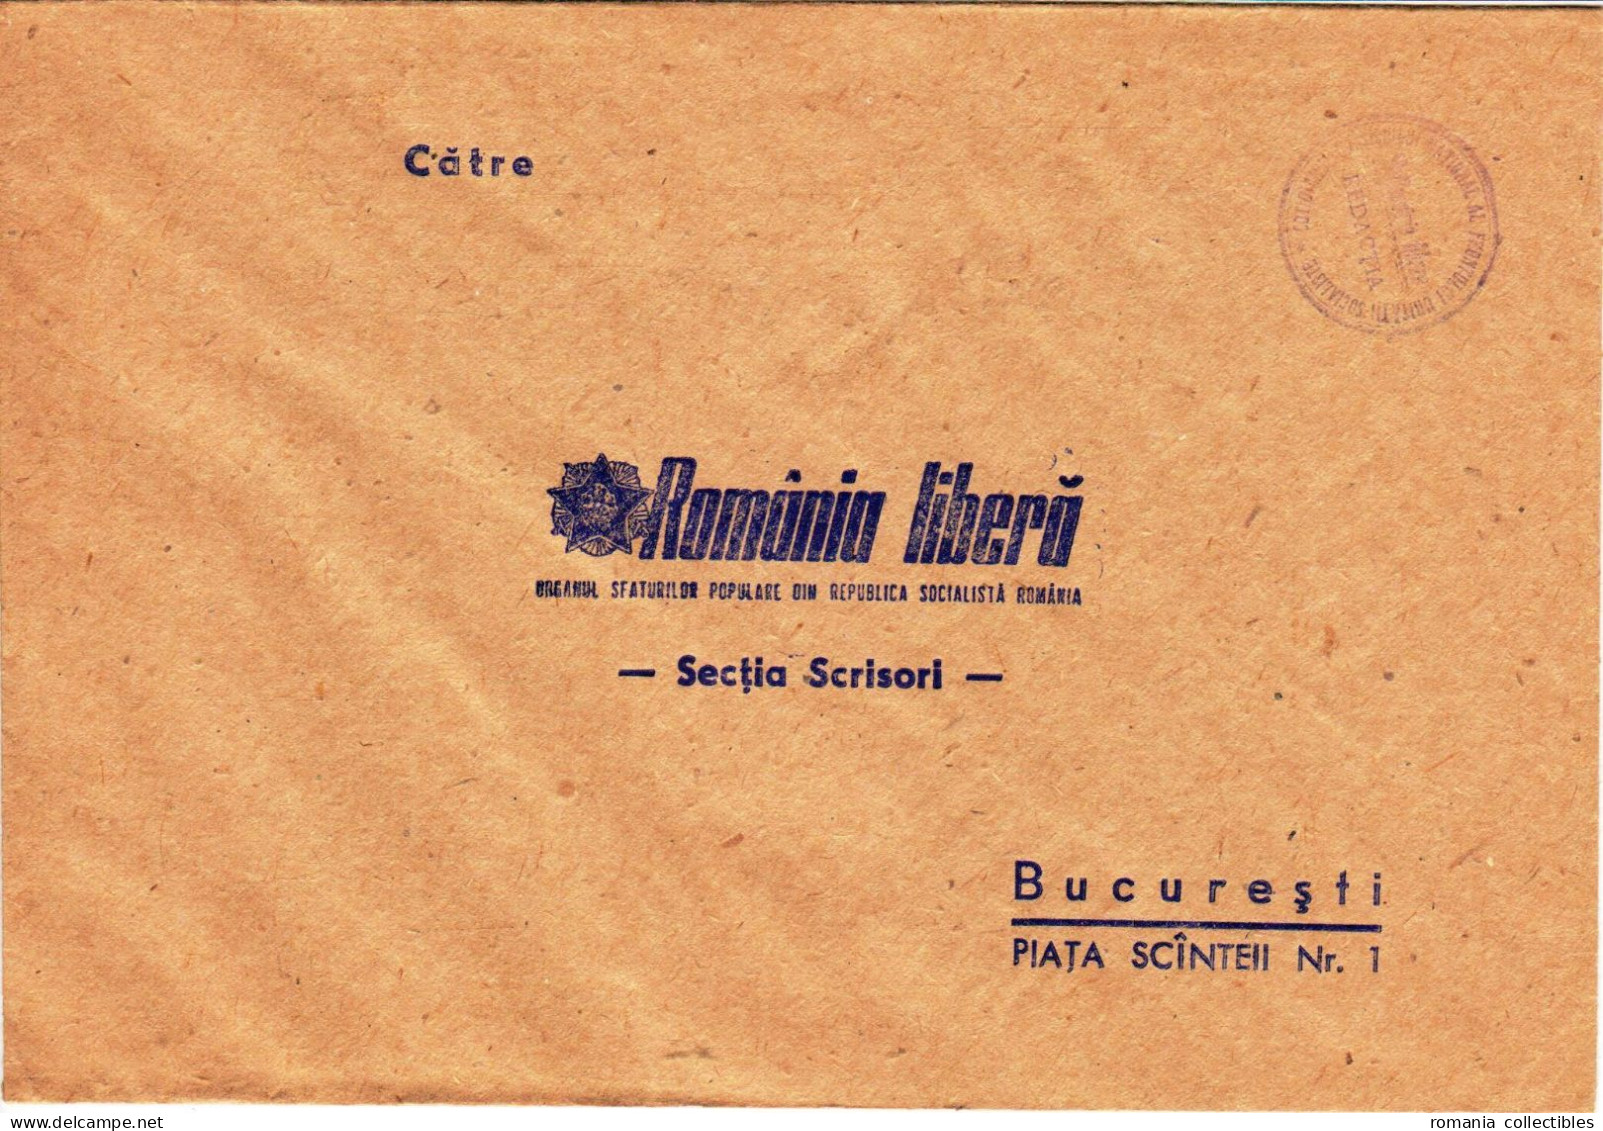 Romania, 1980's, Vintage Uncirculated Postal Cover  - "Romania Libera" Newspaper Advertising - Dienstmarken